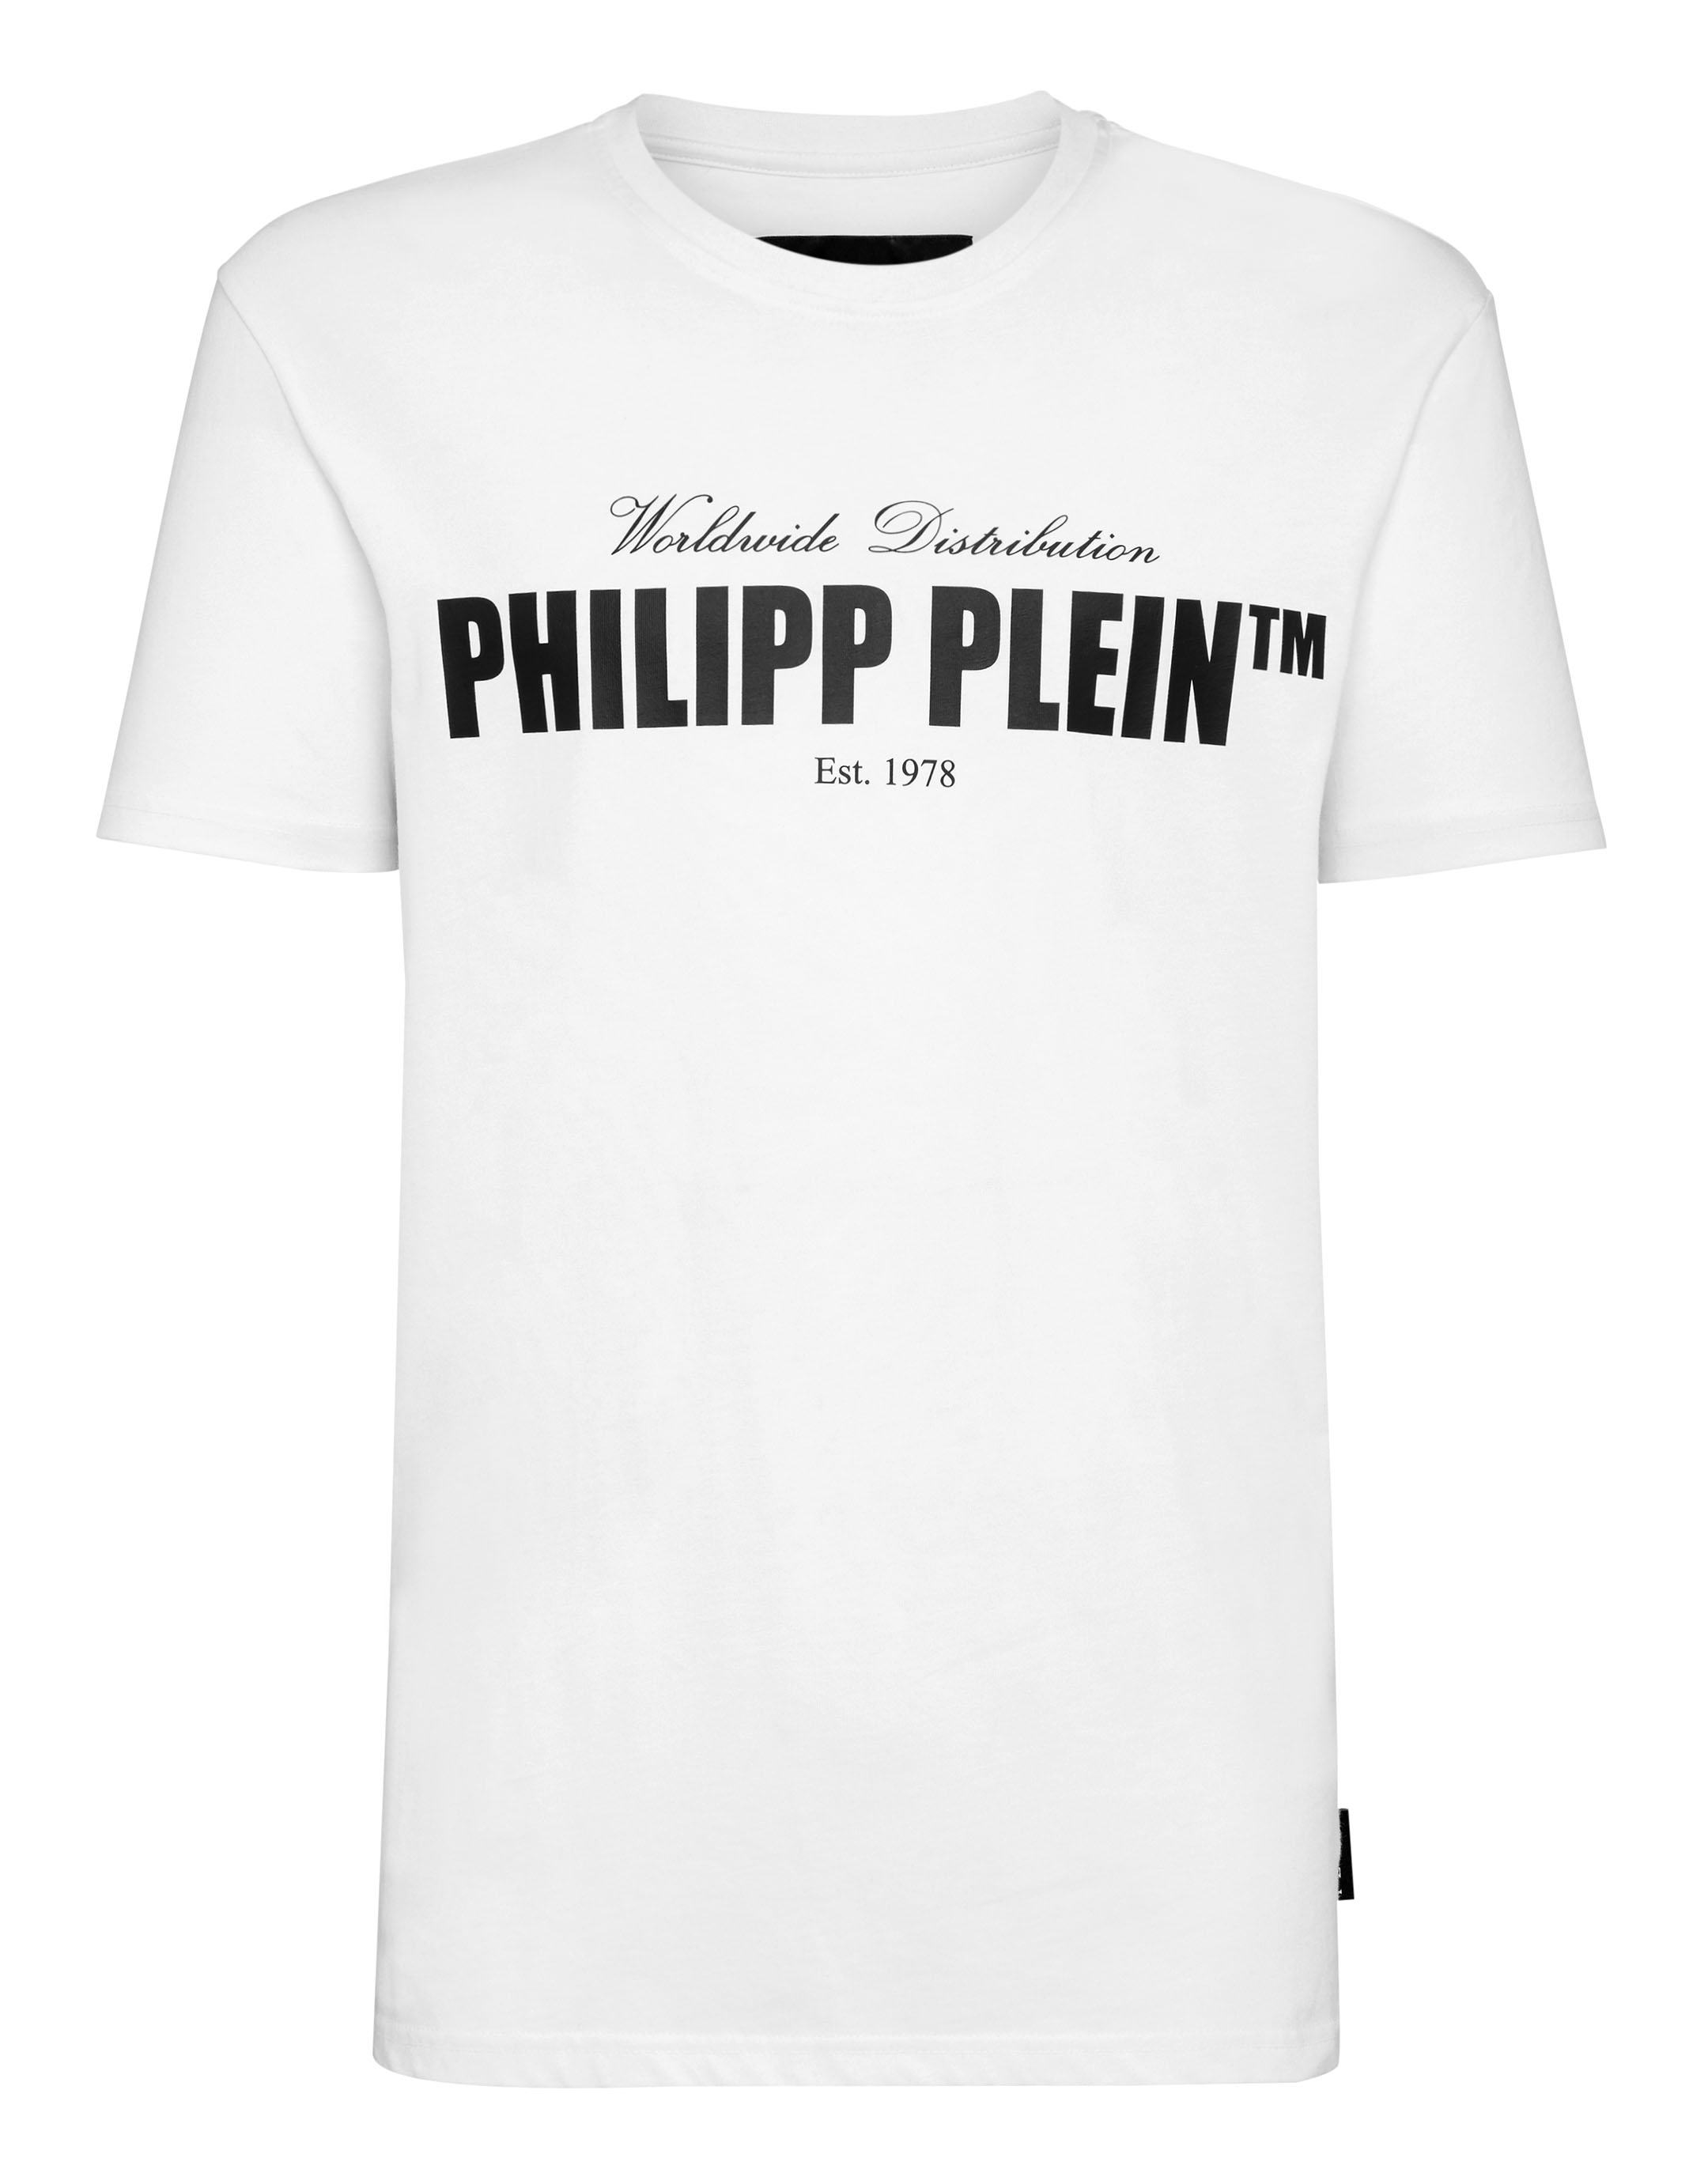 philipp plein shirt